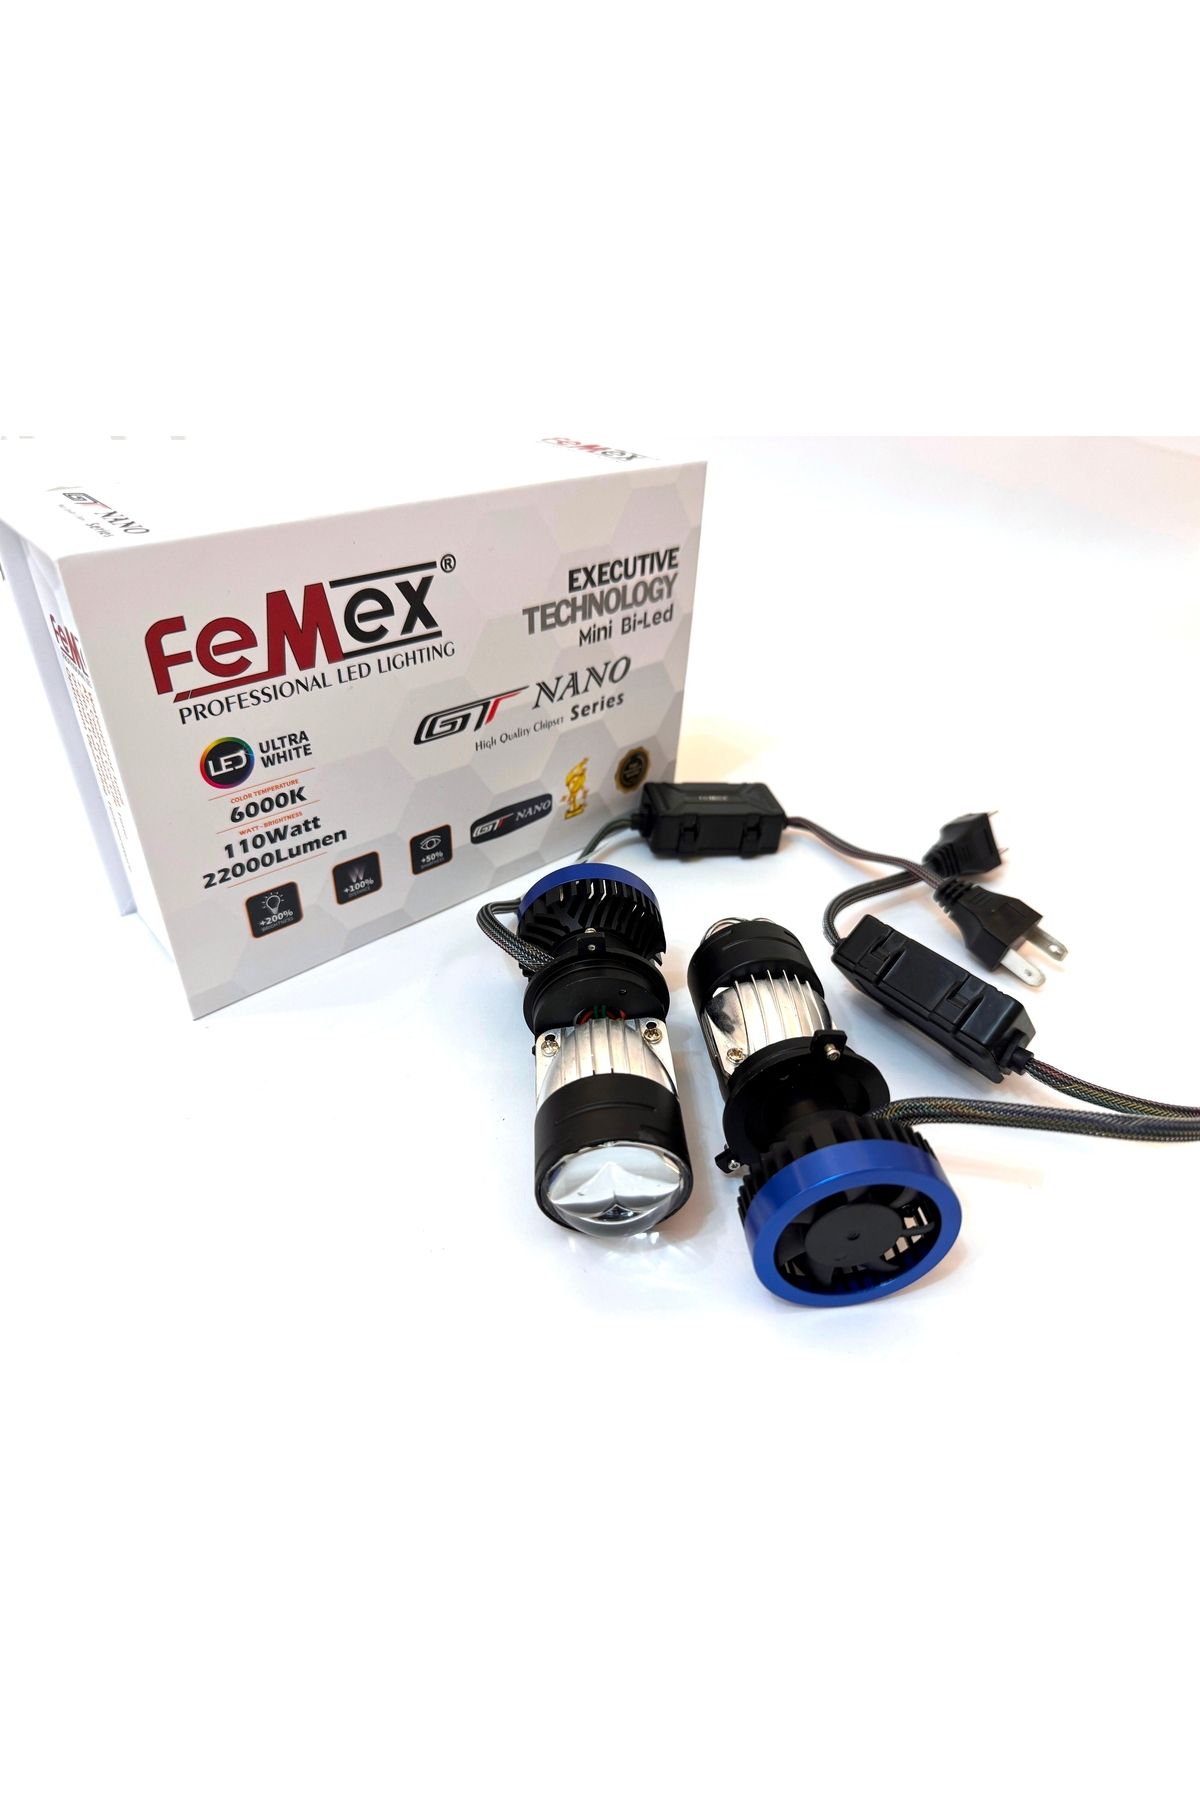 FEMEX Gt Nano Executive H4 Lazerli Mini Bi-led Xenon Kendinden Mercekli